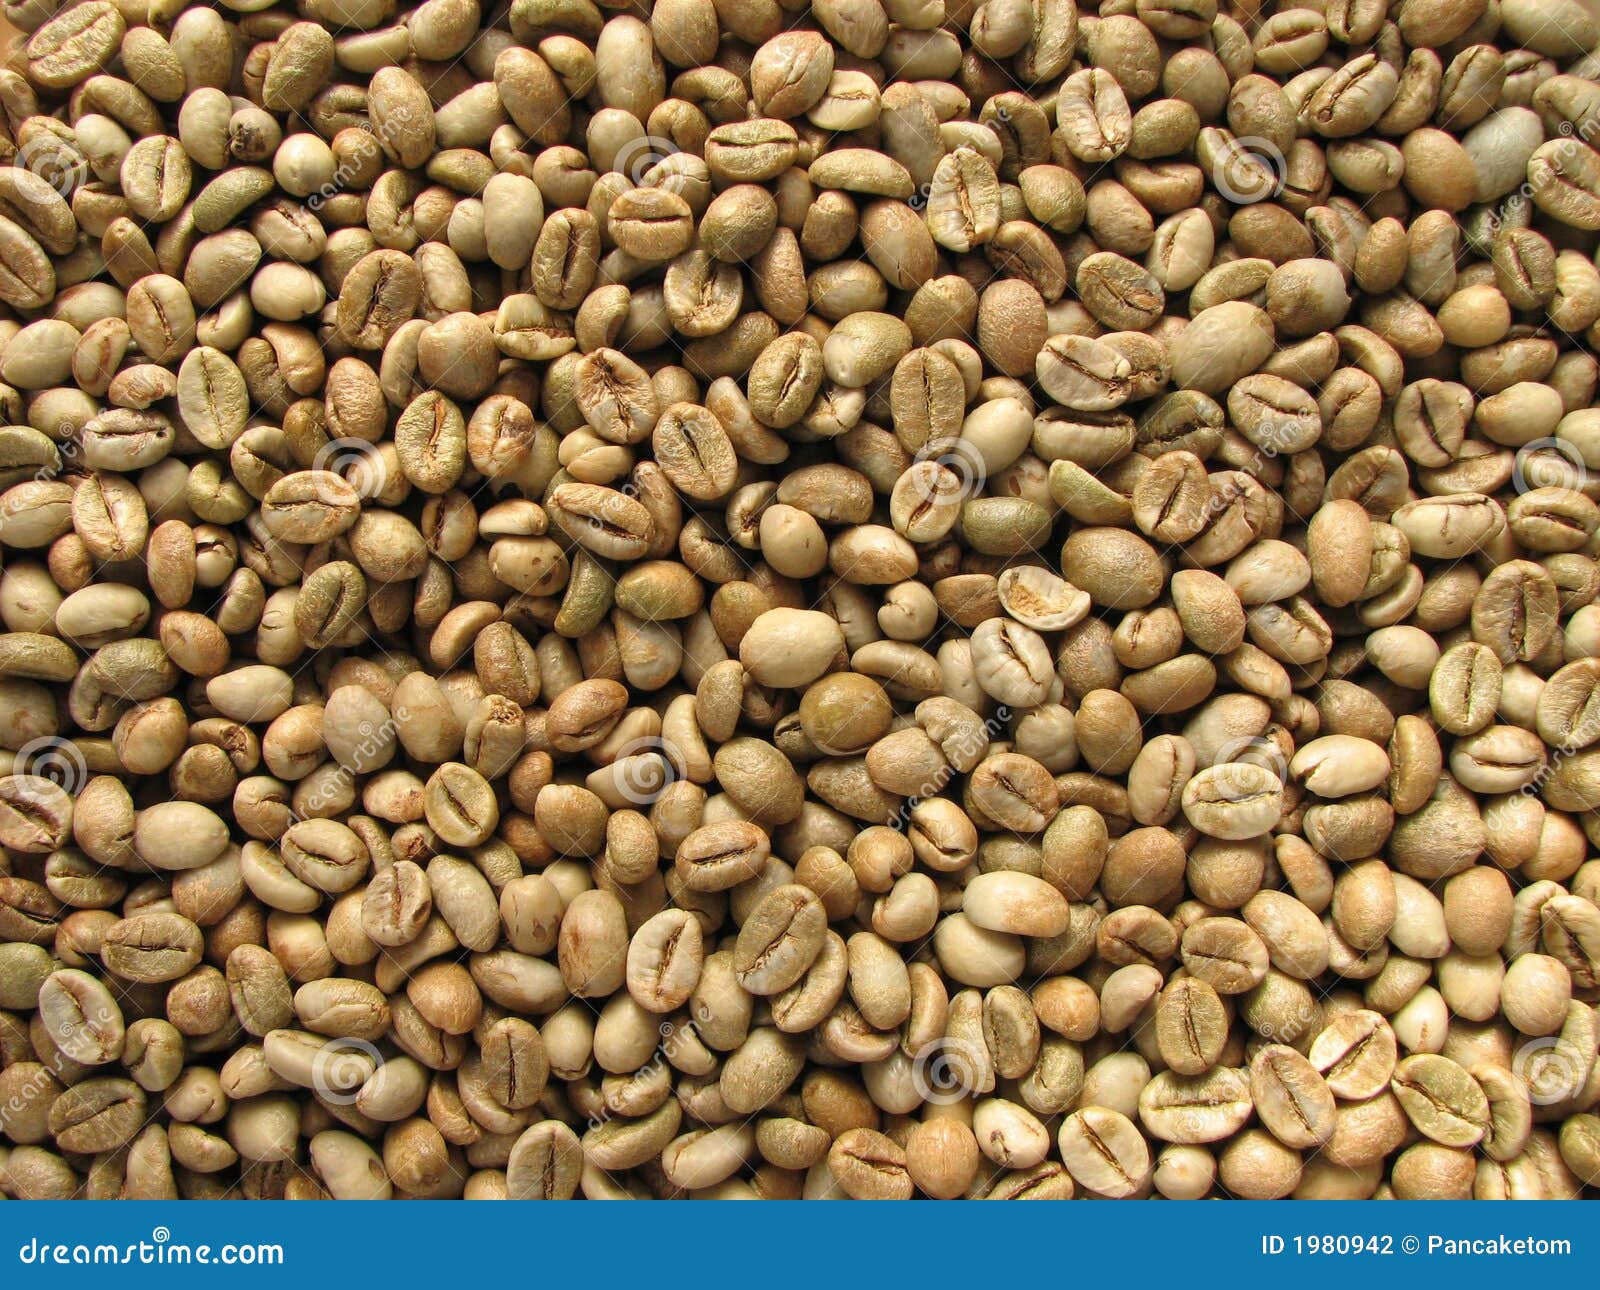 green robusta coffee beans